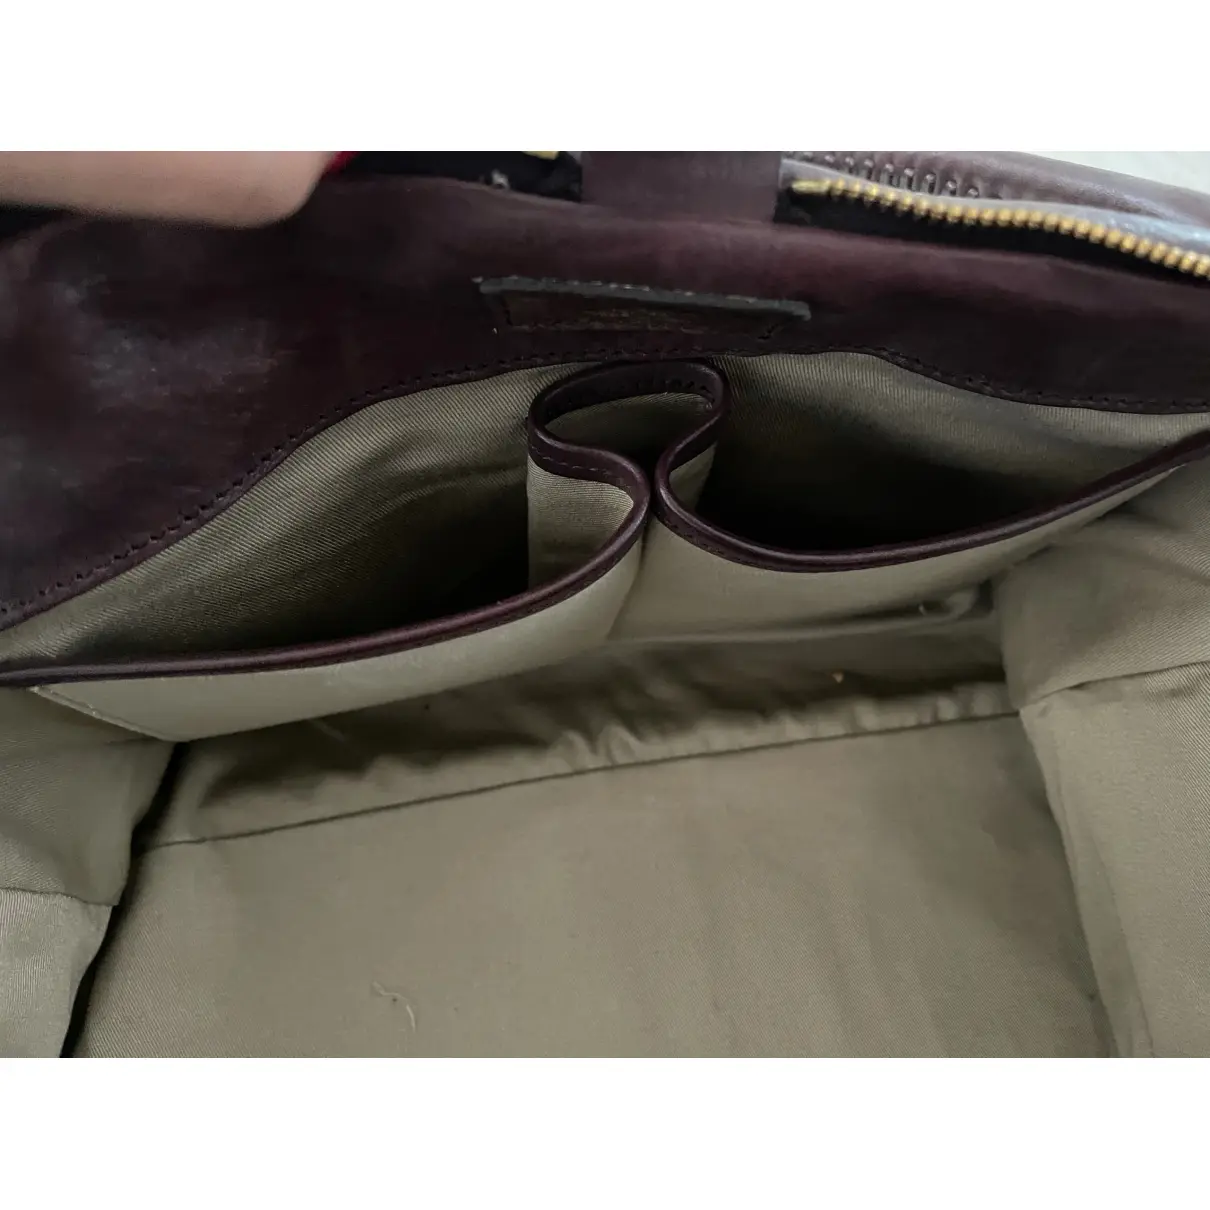 Buy Golden Goose Leather handbag online